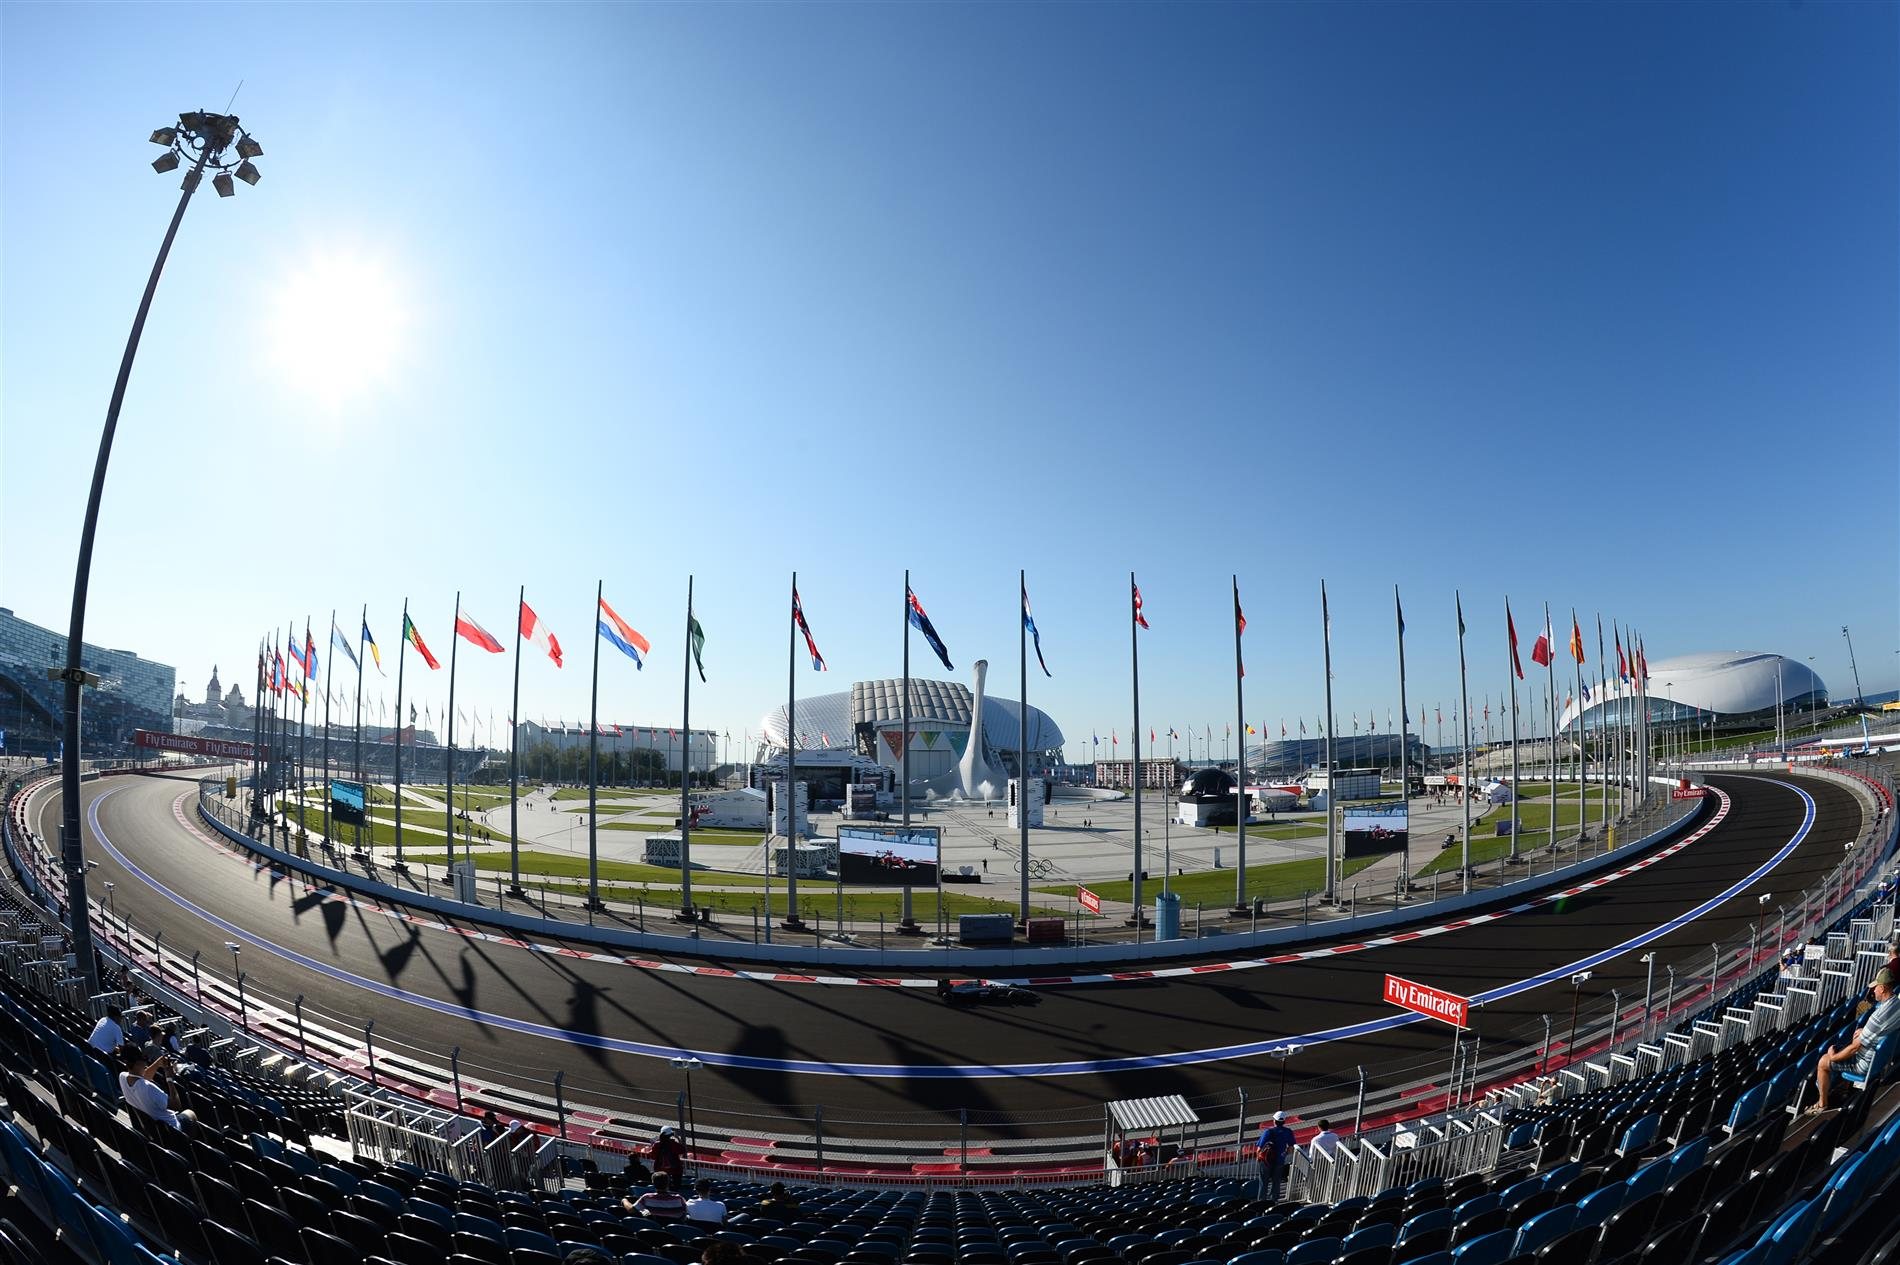 Sochi Autodrom 2014